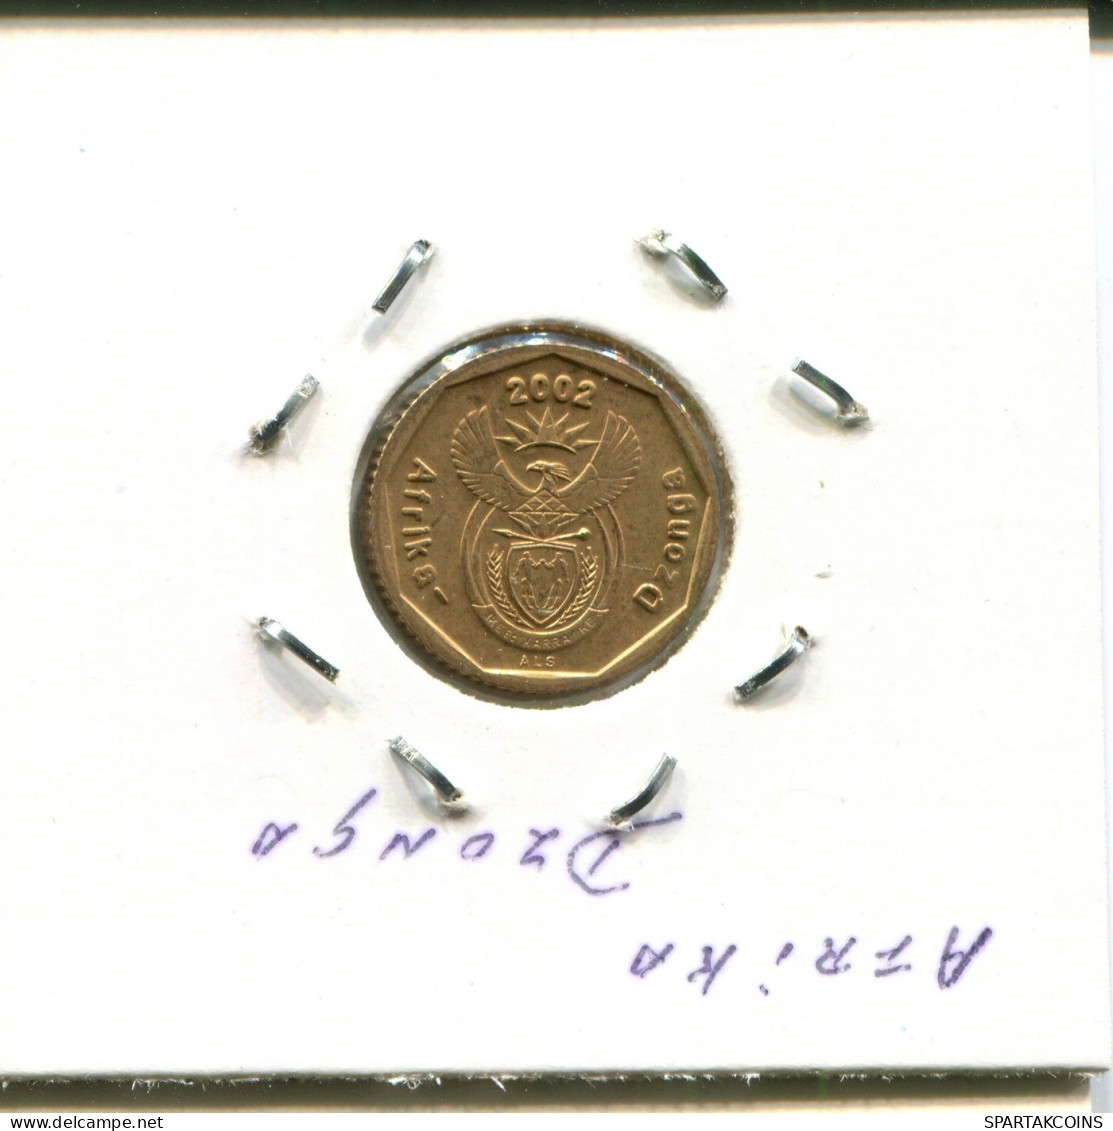 10 CENTS 2002 SUDAFRICA SOUTH AFRICA Moneda #AX227.E.A - Sudáfrica